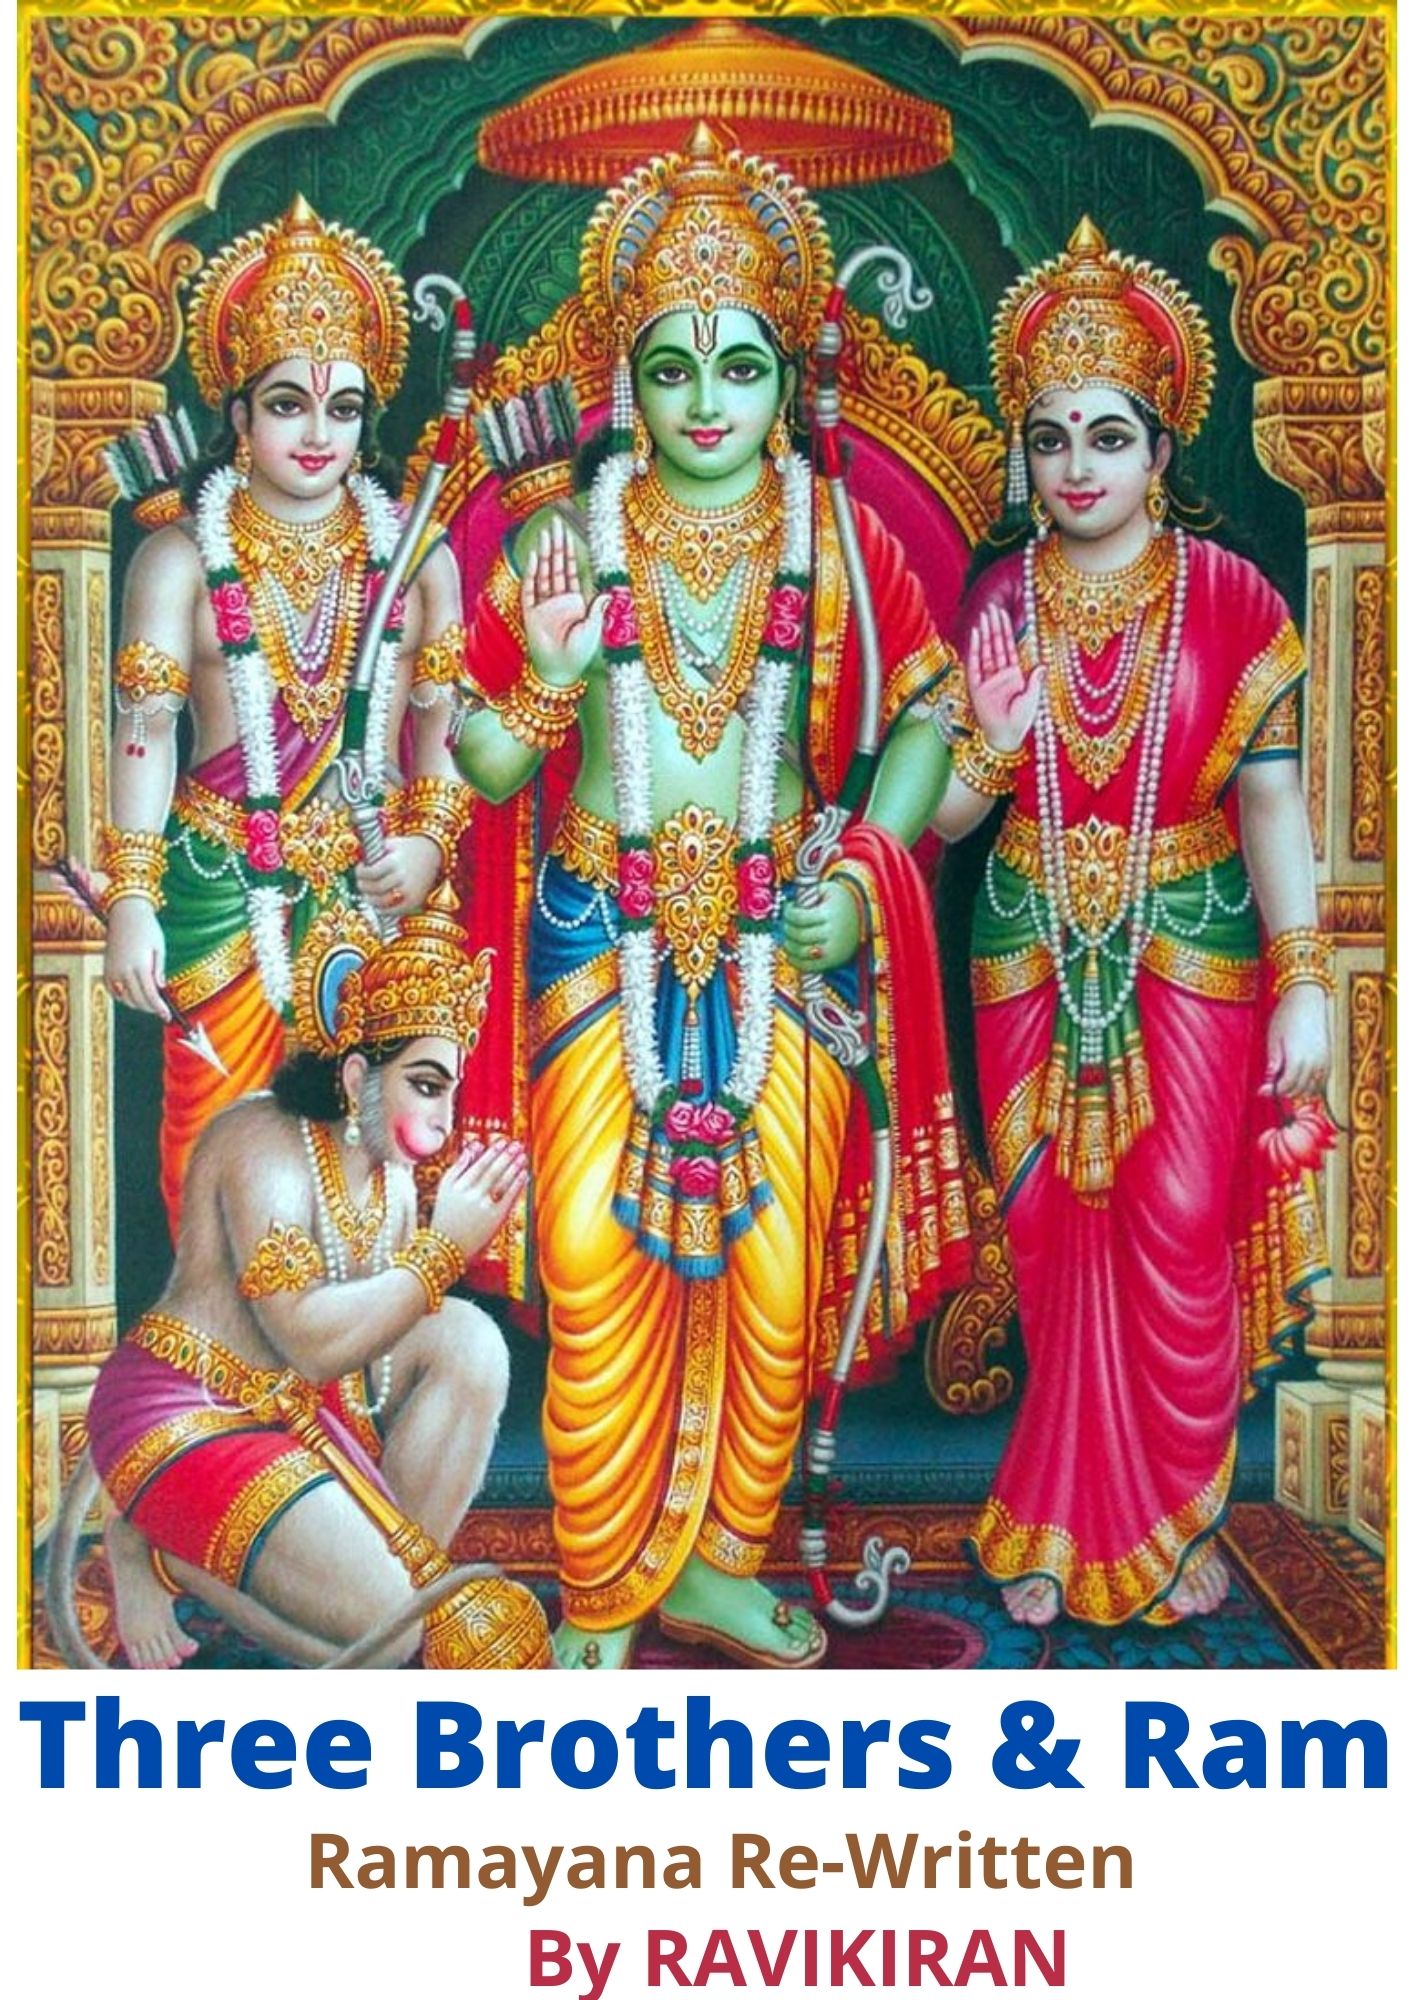 Three Brother & Ram by Ravikiran